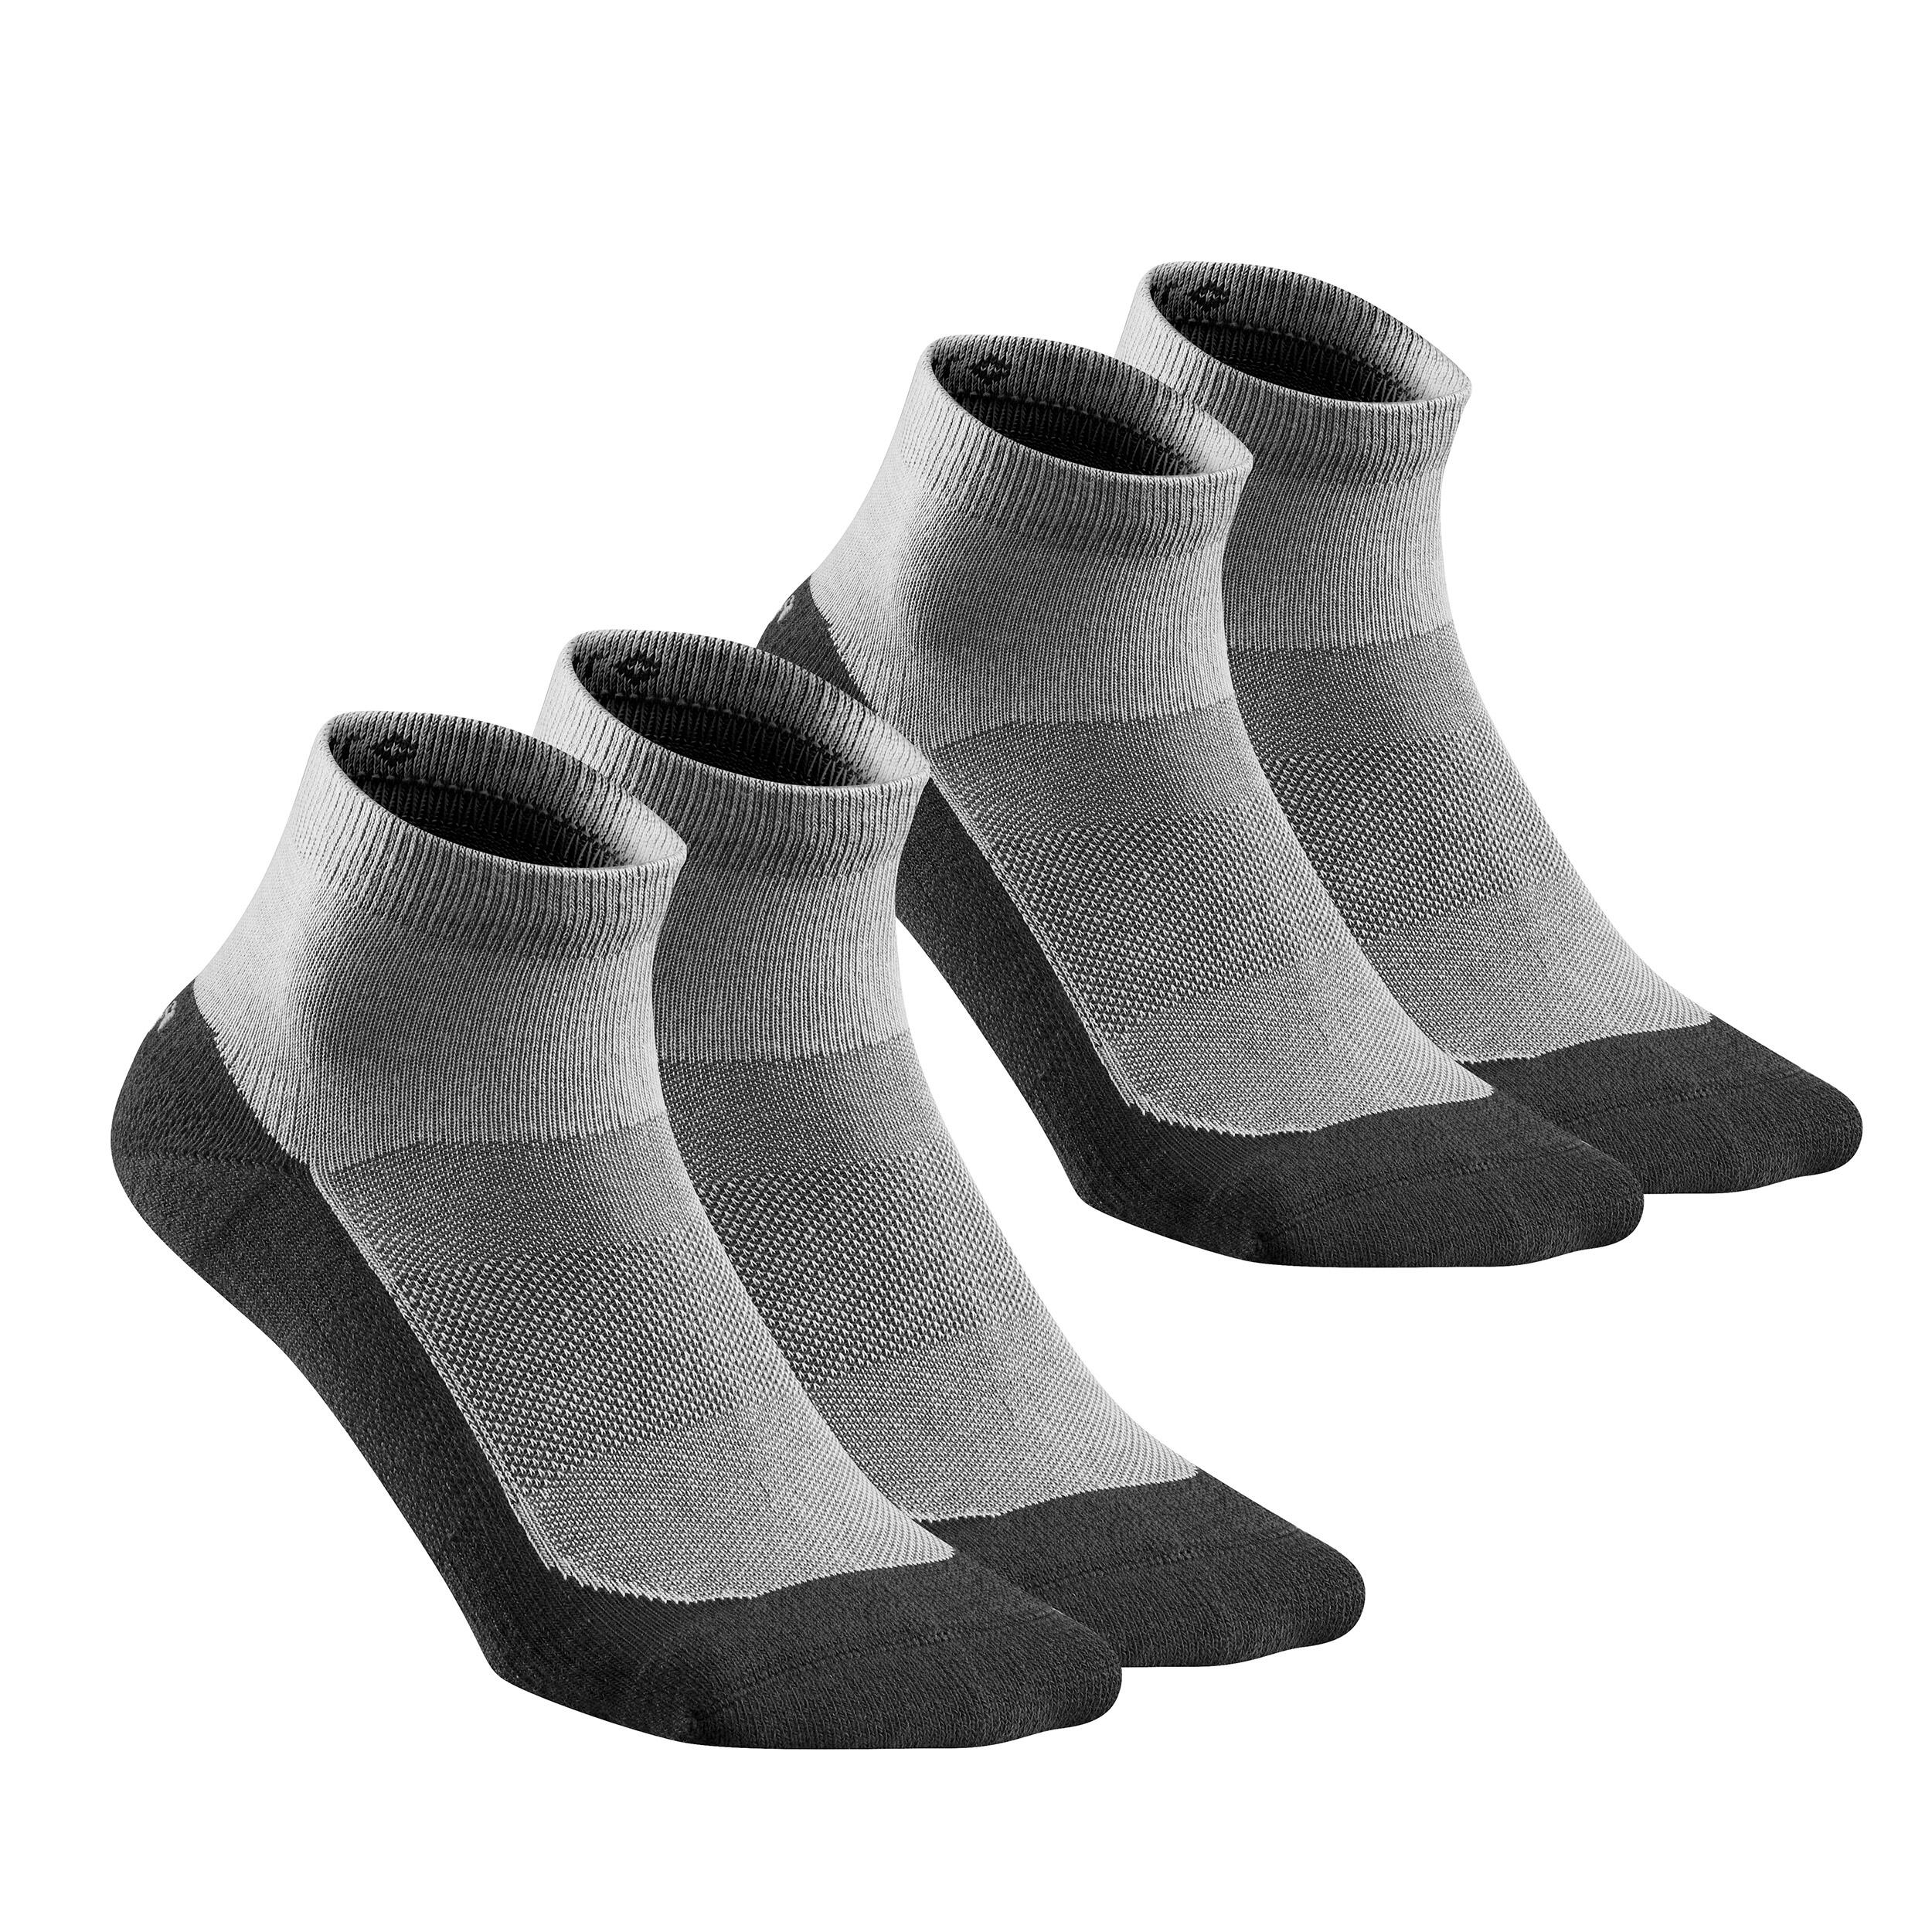 Merino wool hiking socks 2 pair per order 